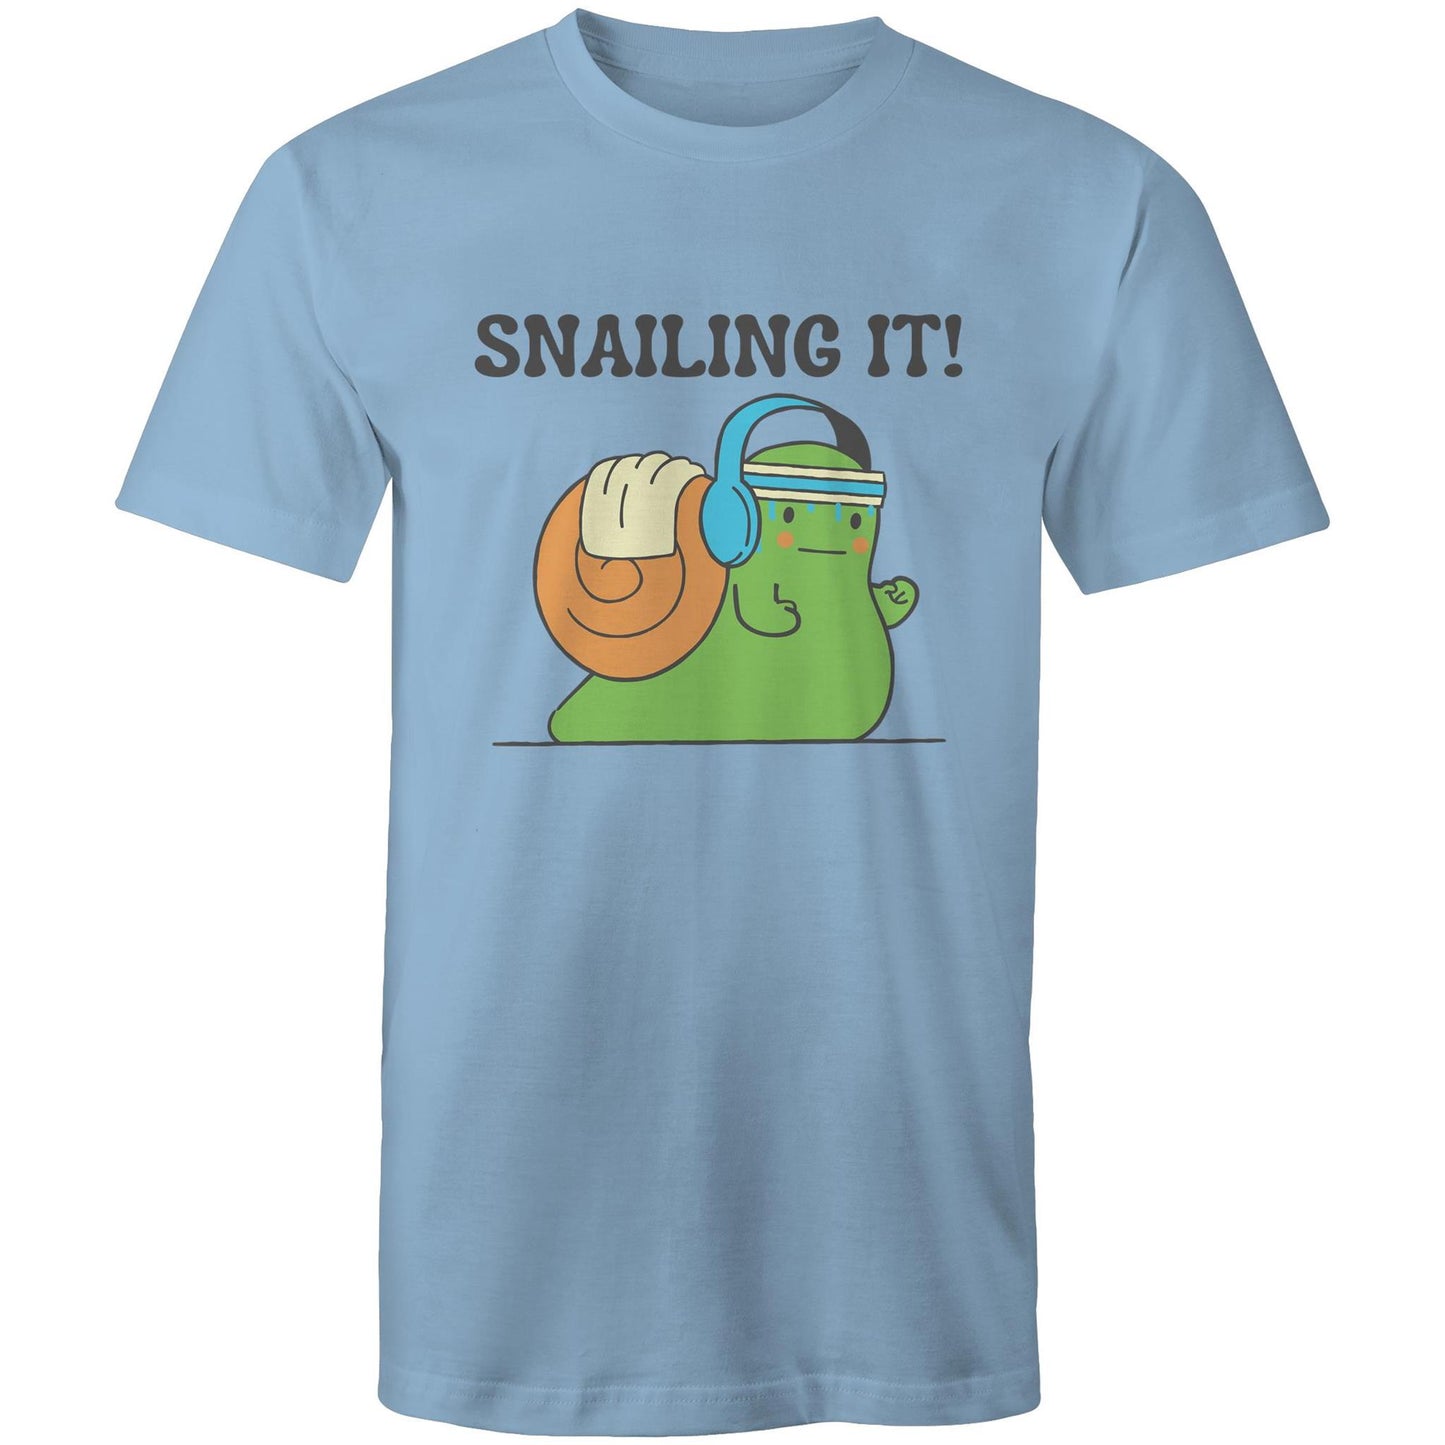 Snailing It - Short Sleeve T-shirt Carolina Blue Fitness T-shirt